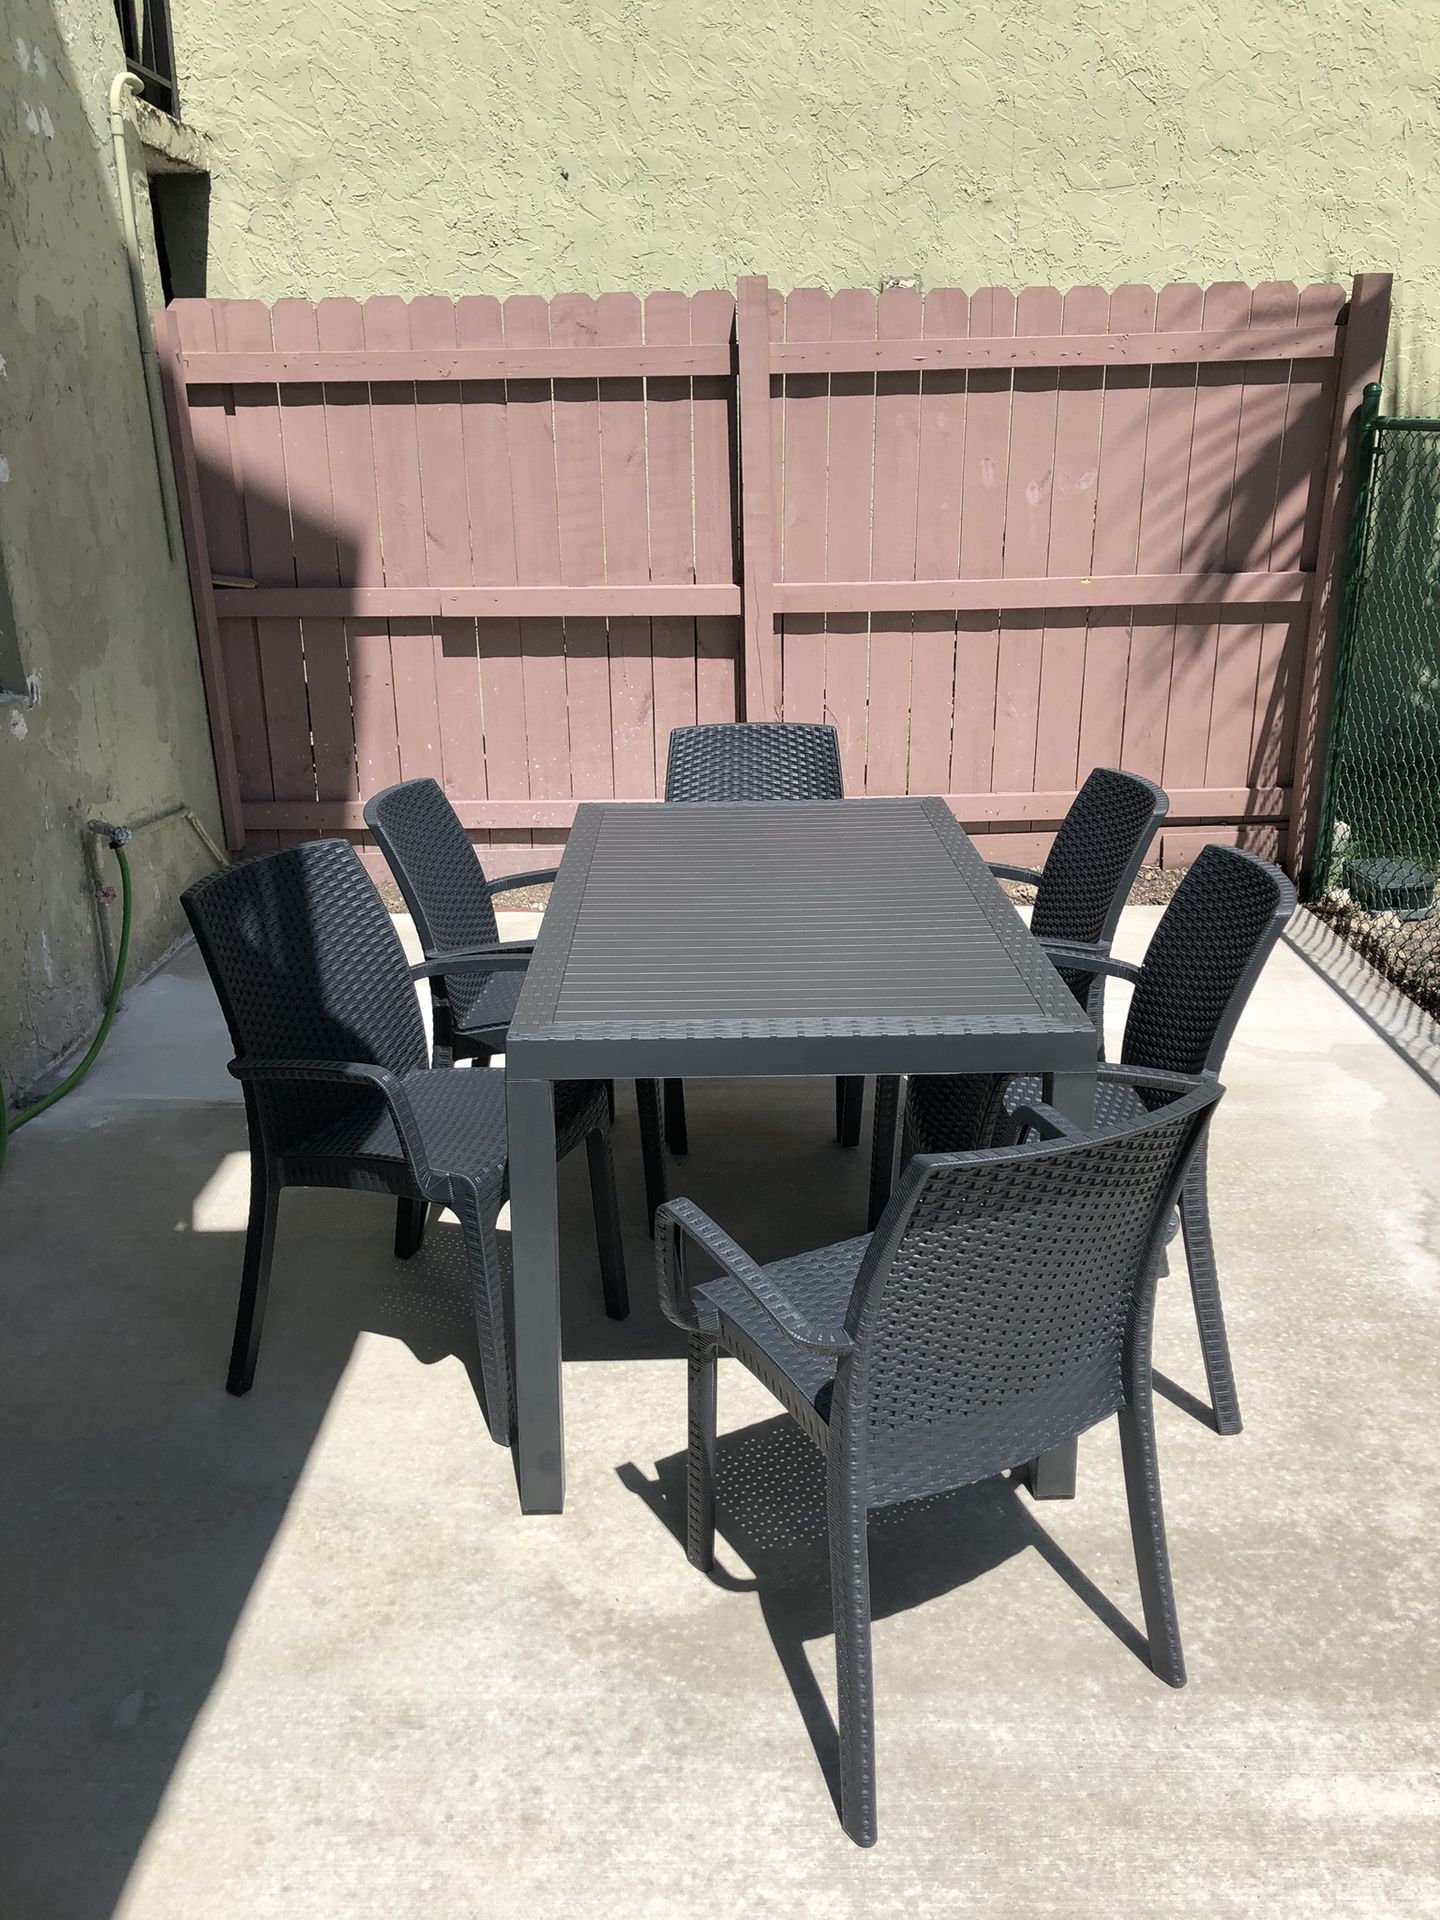 Brand new !!! / Furniture / Patio furniture / outdoor dining table / Mesa de patio / patio dining set